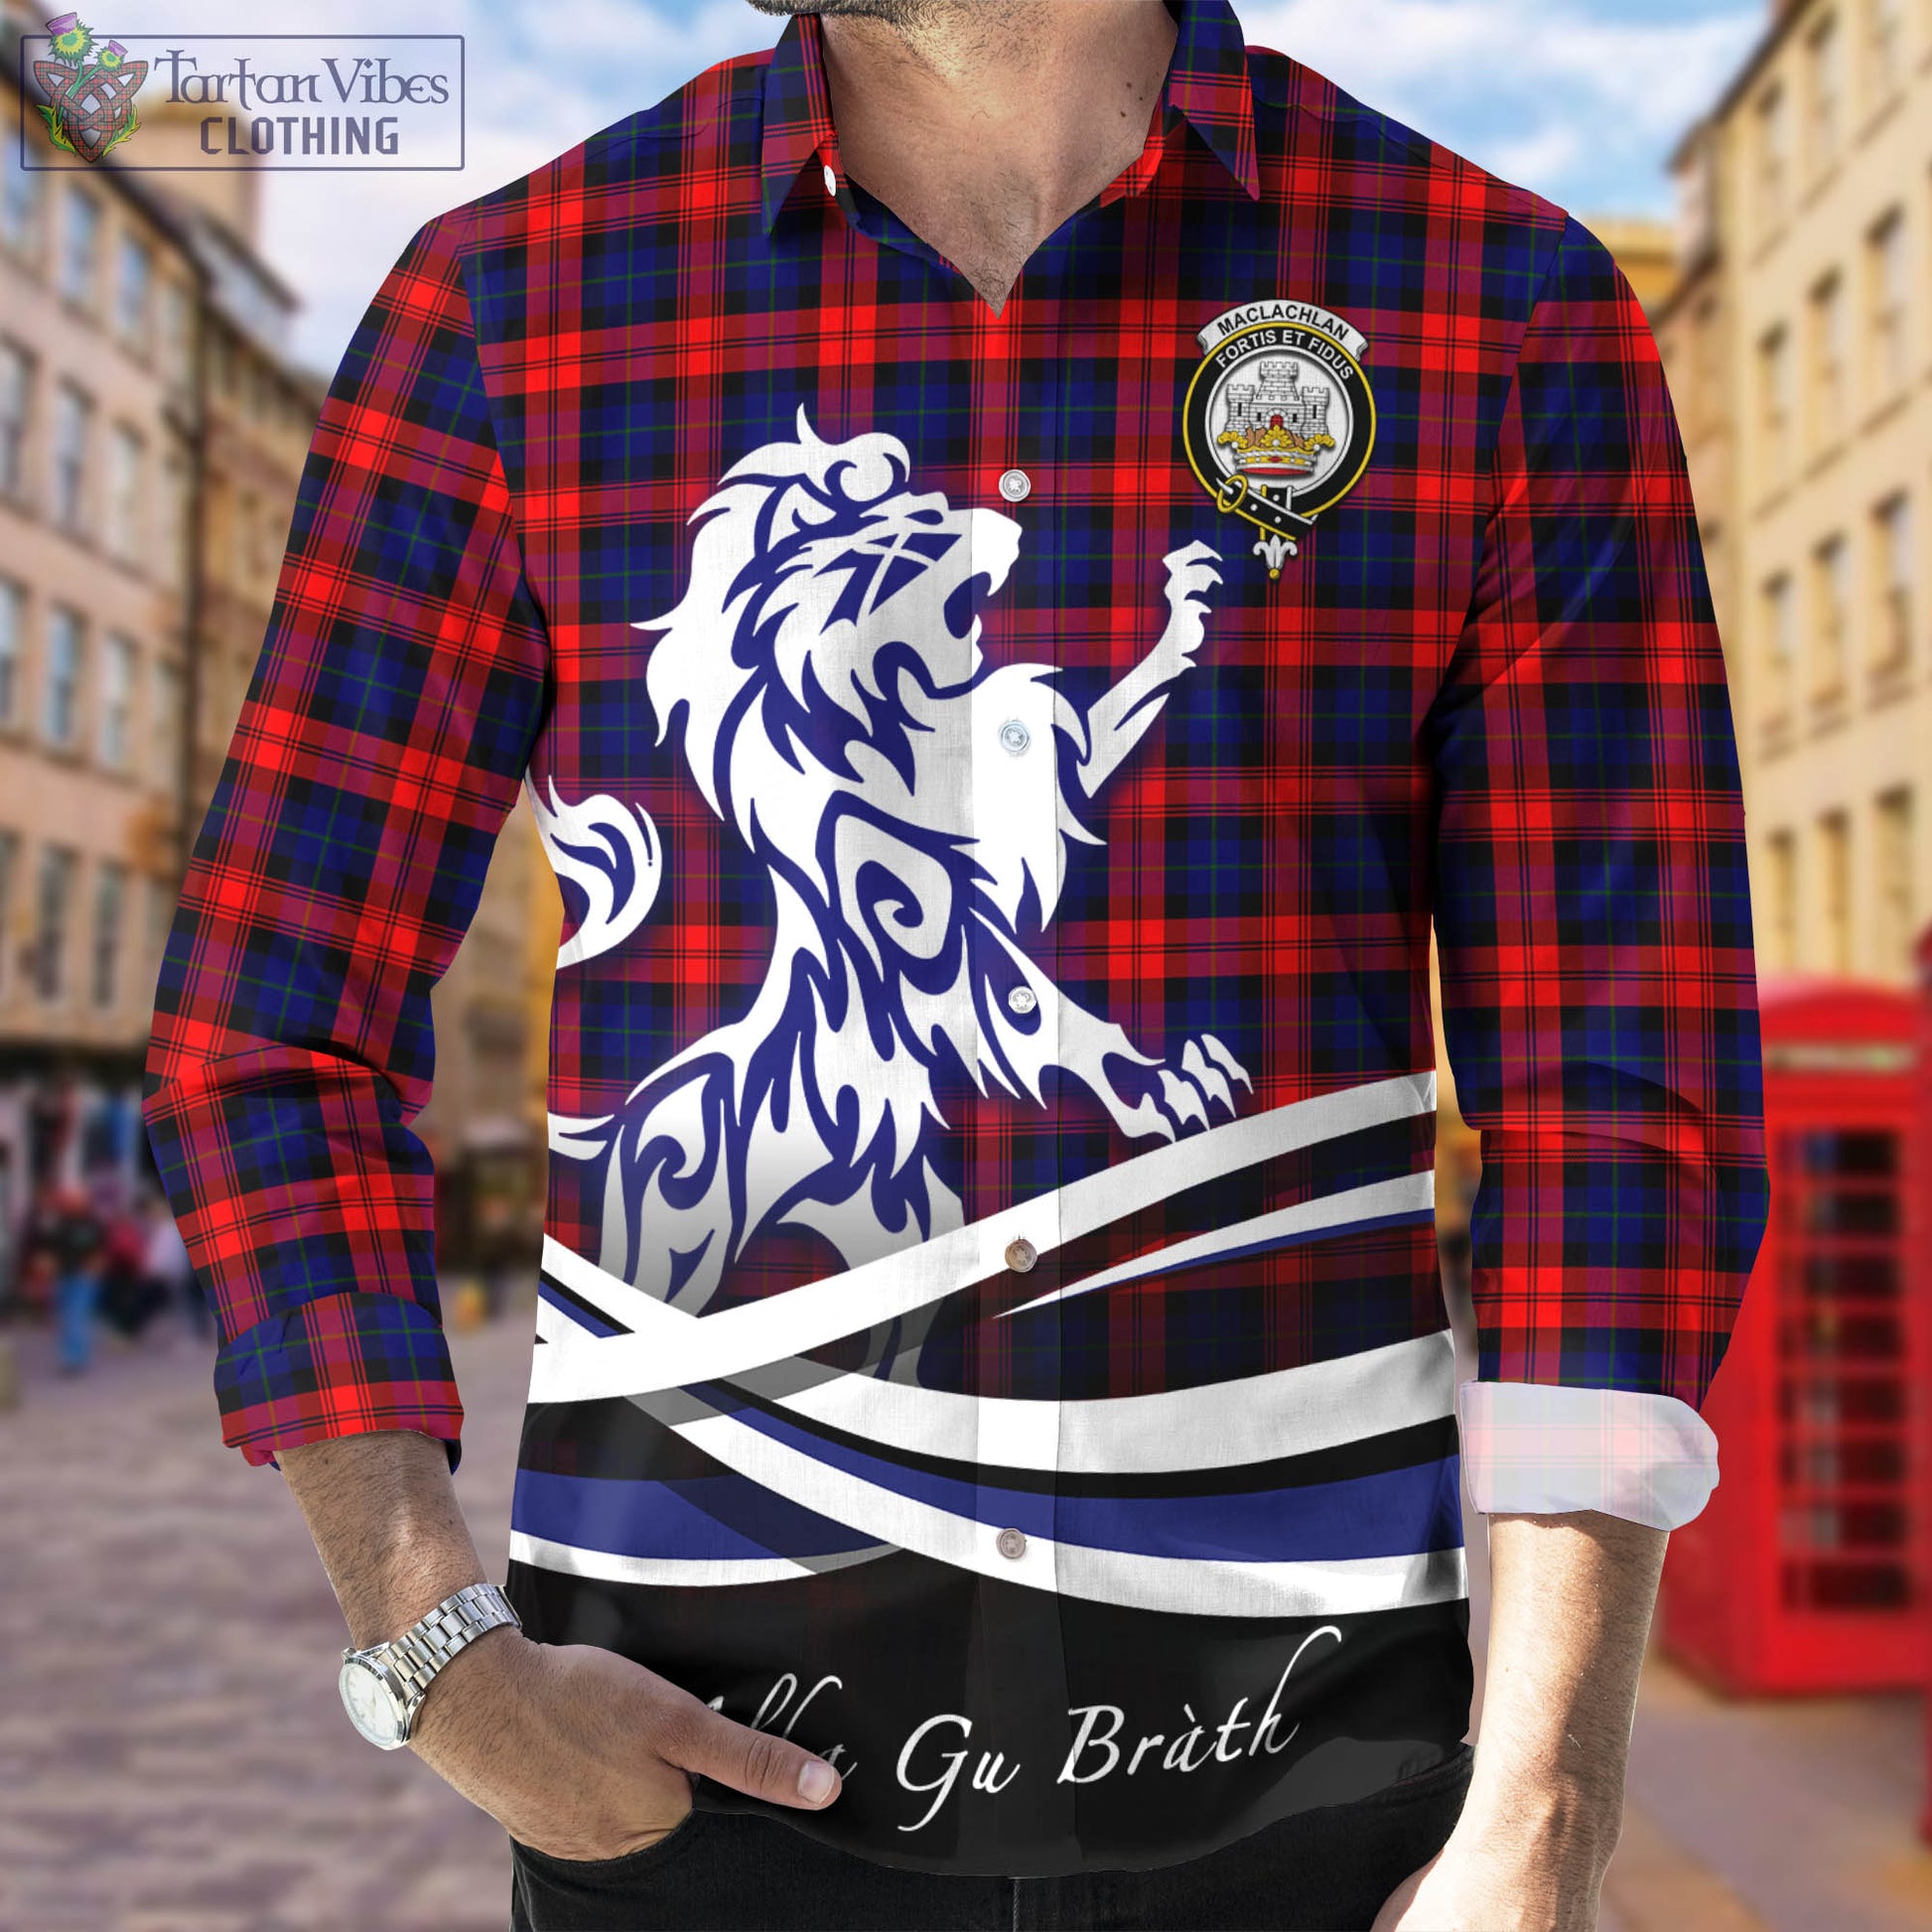 maclachlan-modern-tartan-long-sleeve-button-up-shirt-with-alba-gu-brath-regal-lion-emblem